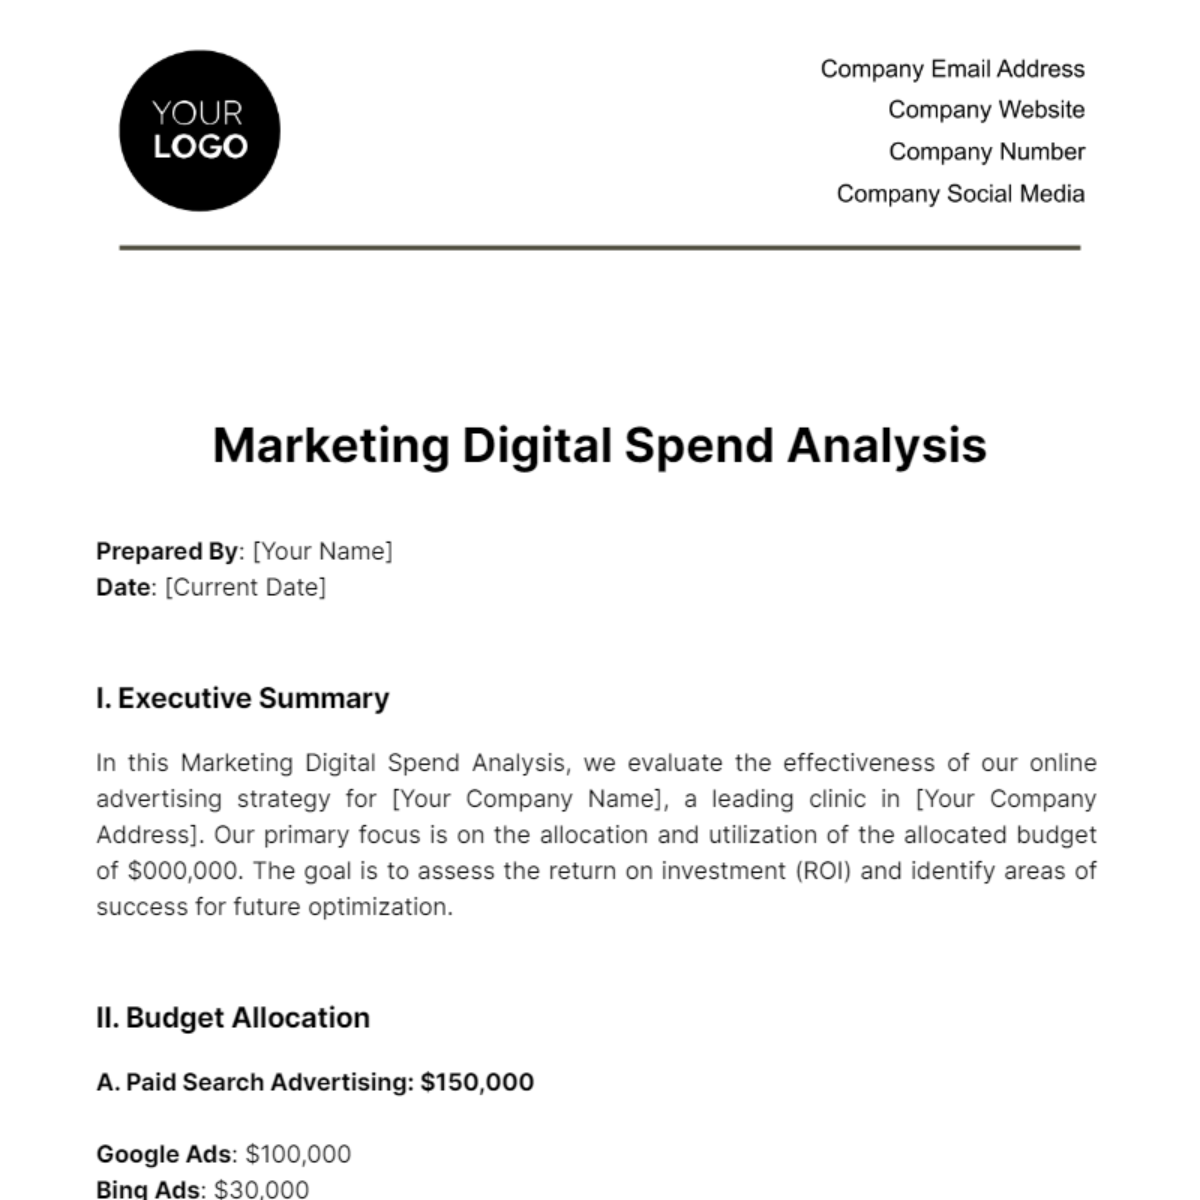 Marketing Digital Spend Analysis Template